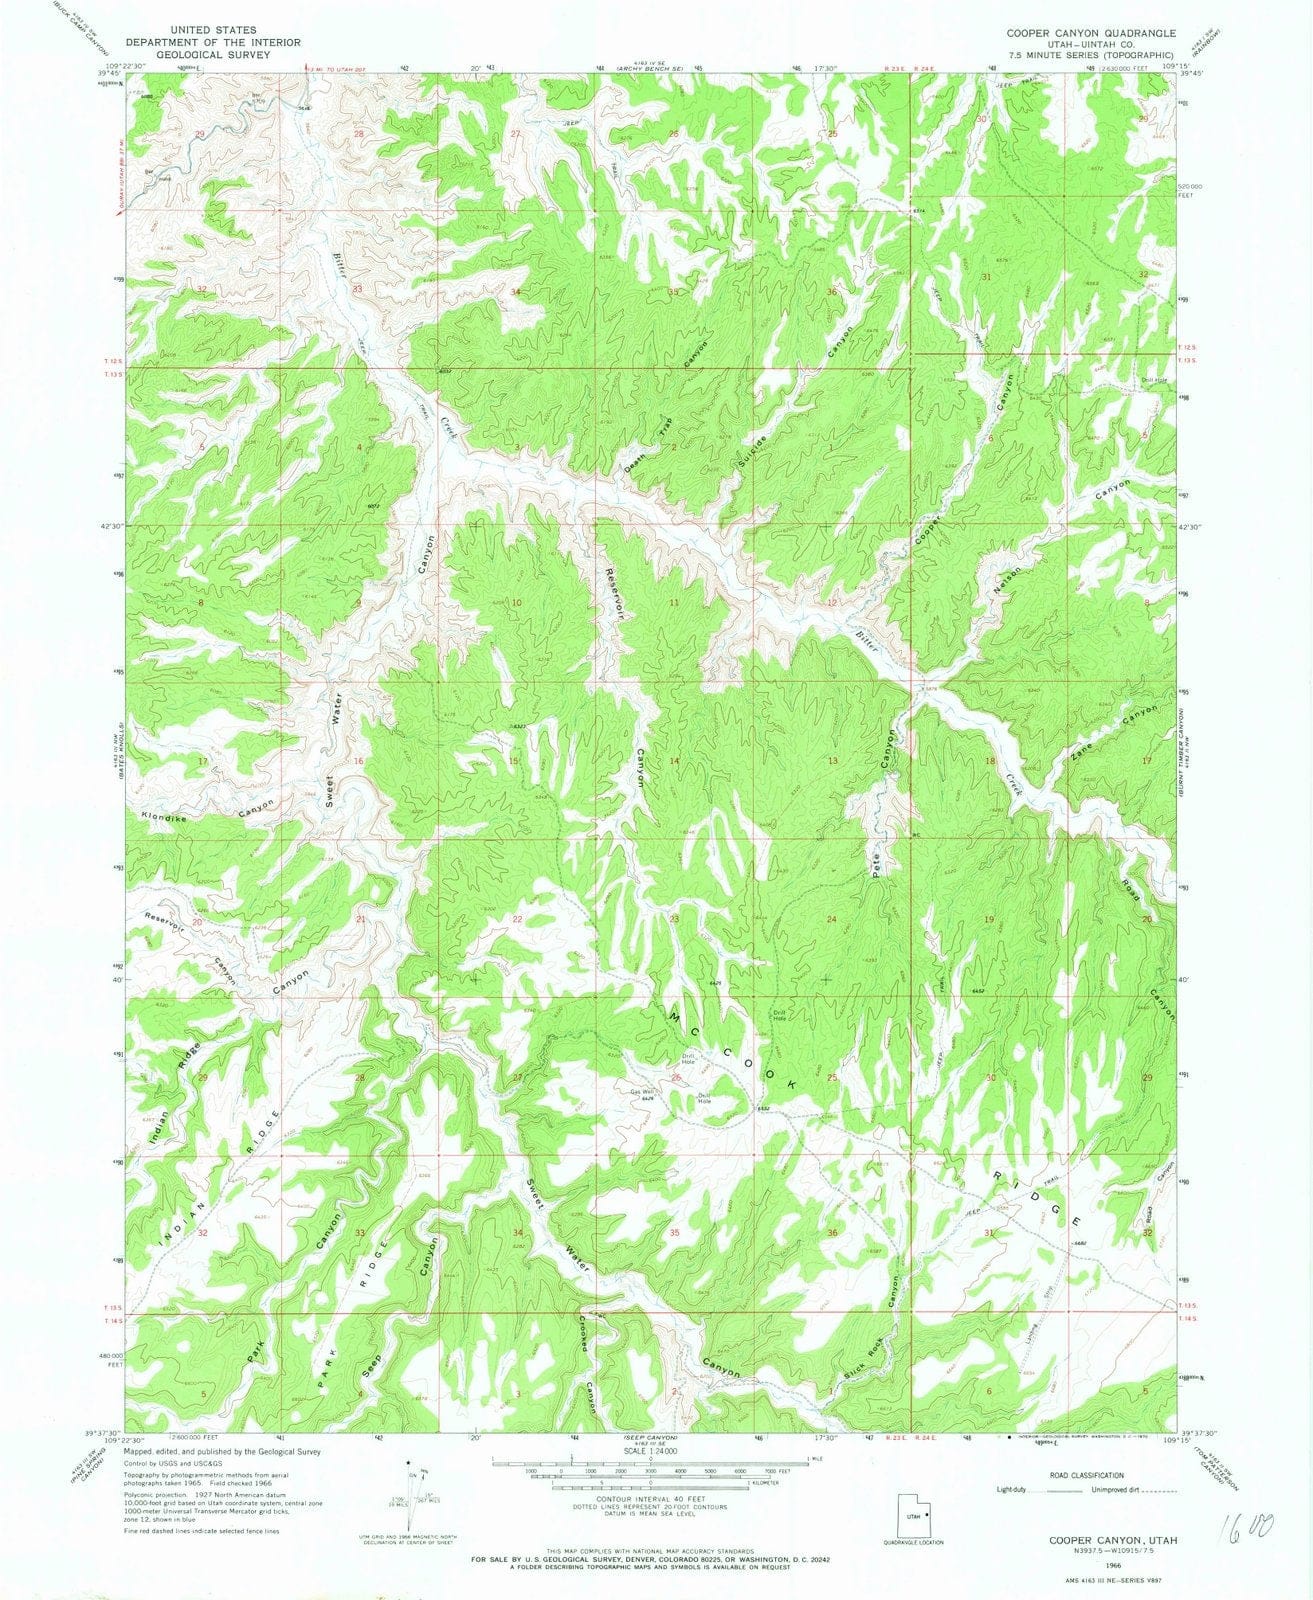 1966 Copper Canyon, UT - Utah - USGS Topographic Map